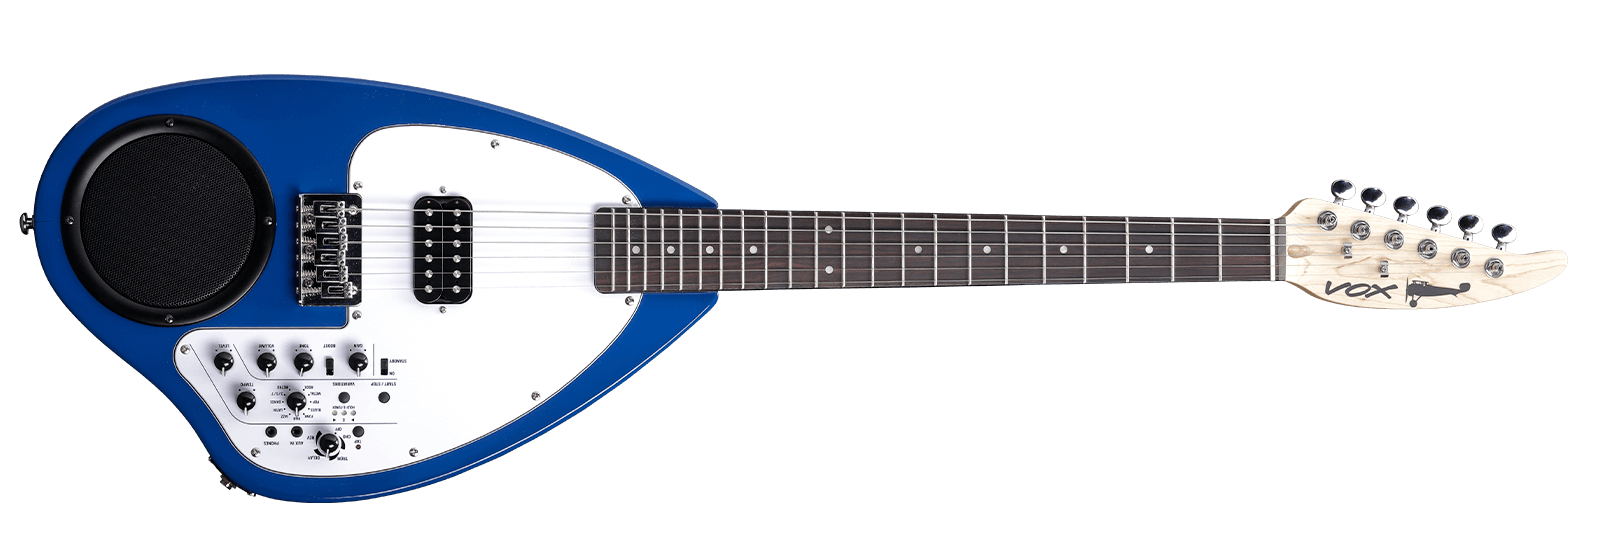 Vox APC-1 Travel Guitars With Built-In Amp And Rhythm blue Metallic horizontal